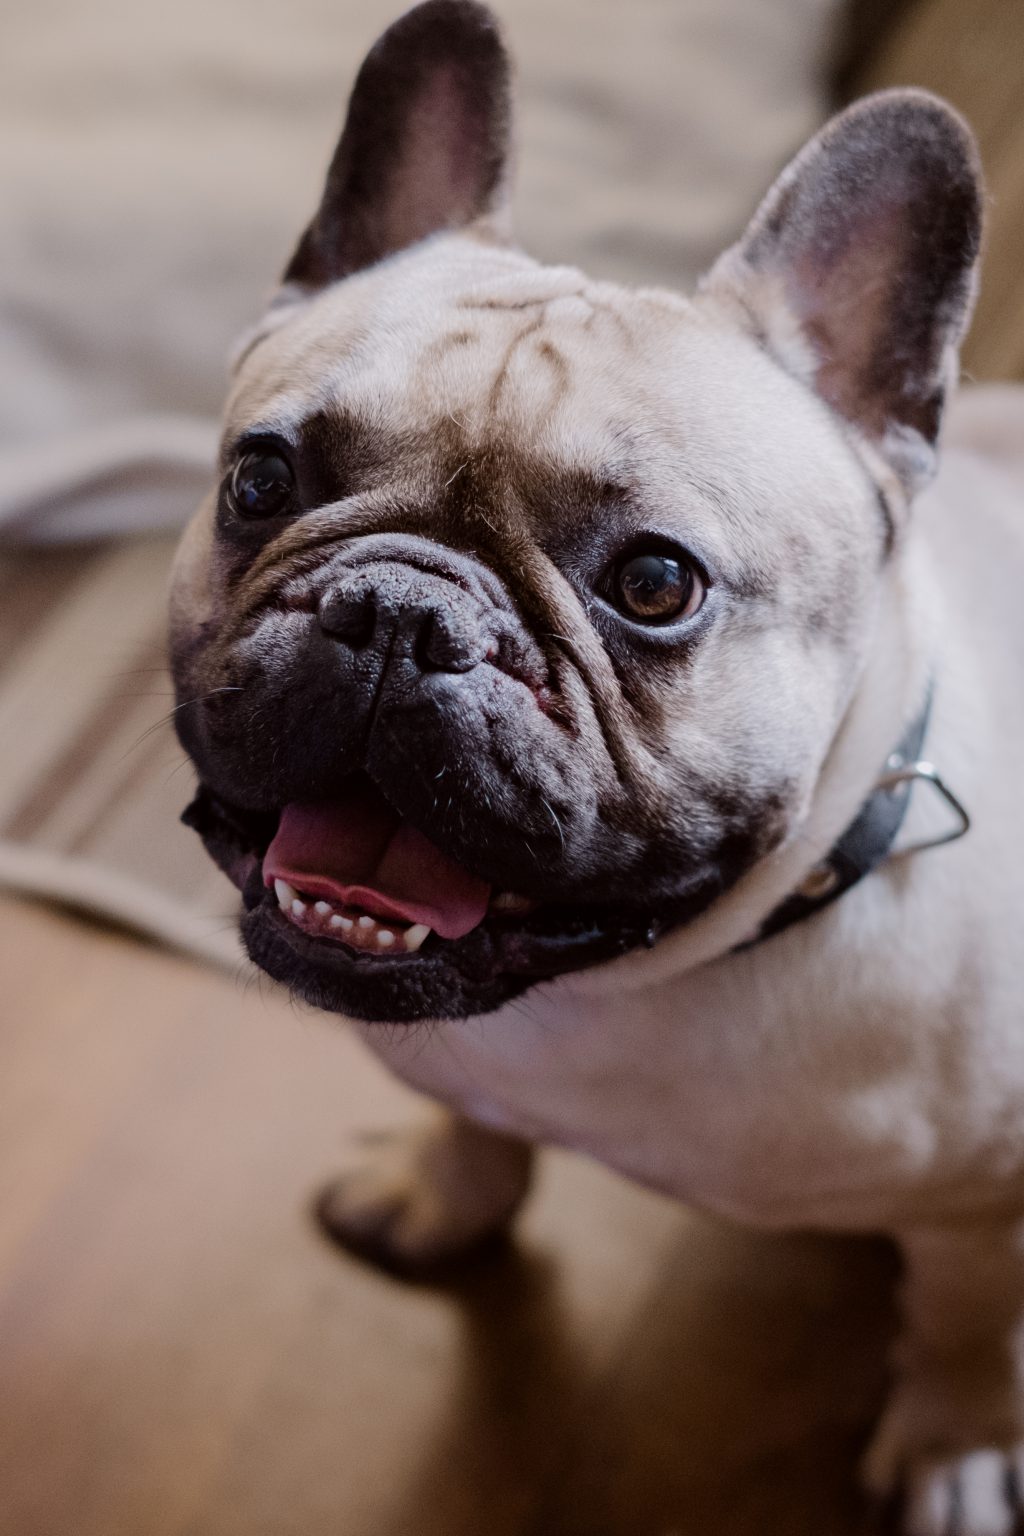 French Bulldog smiling - free stock photo